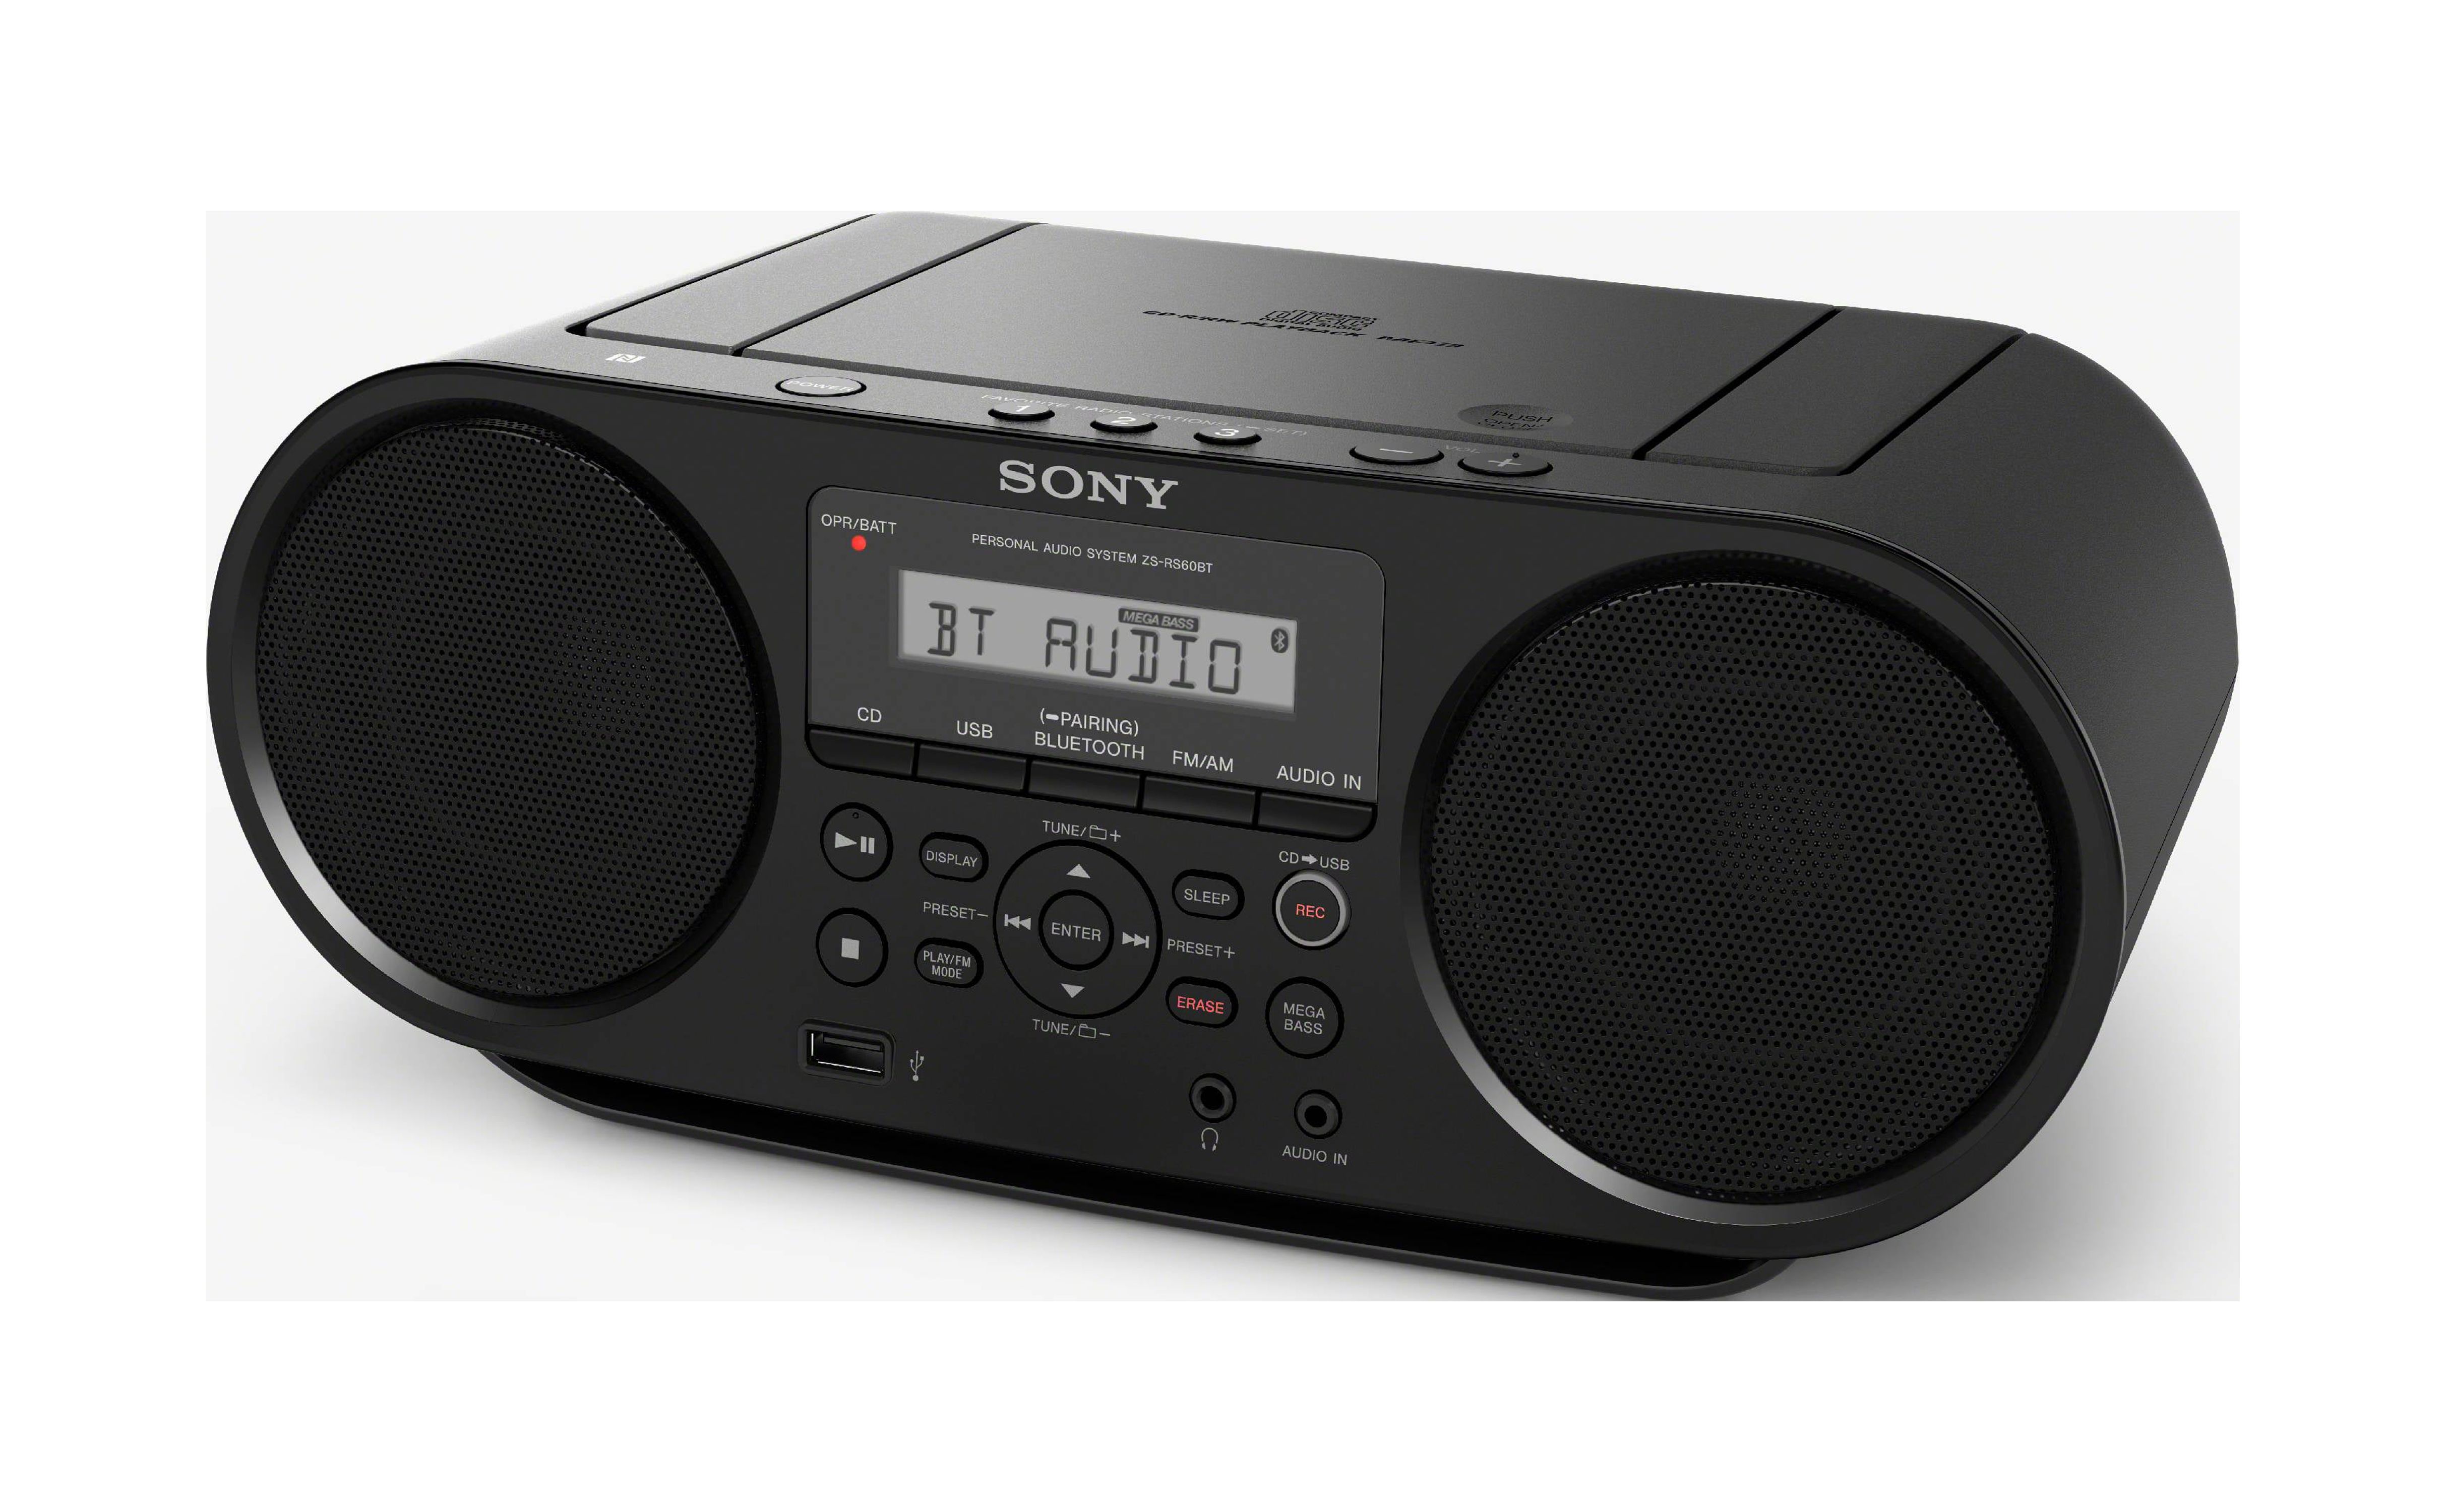 Sony Bluetooth CD/Radio Boombox, Black, ZS-RS60BT - image 2 of 2